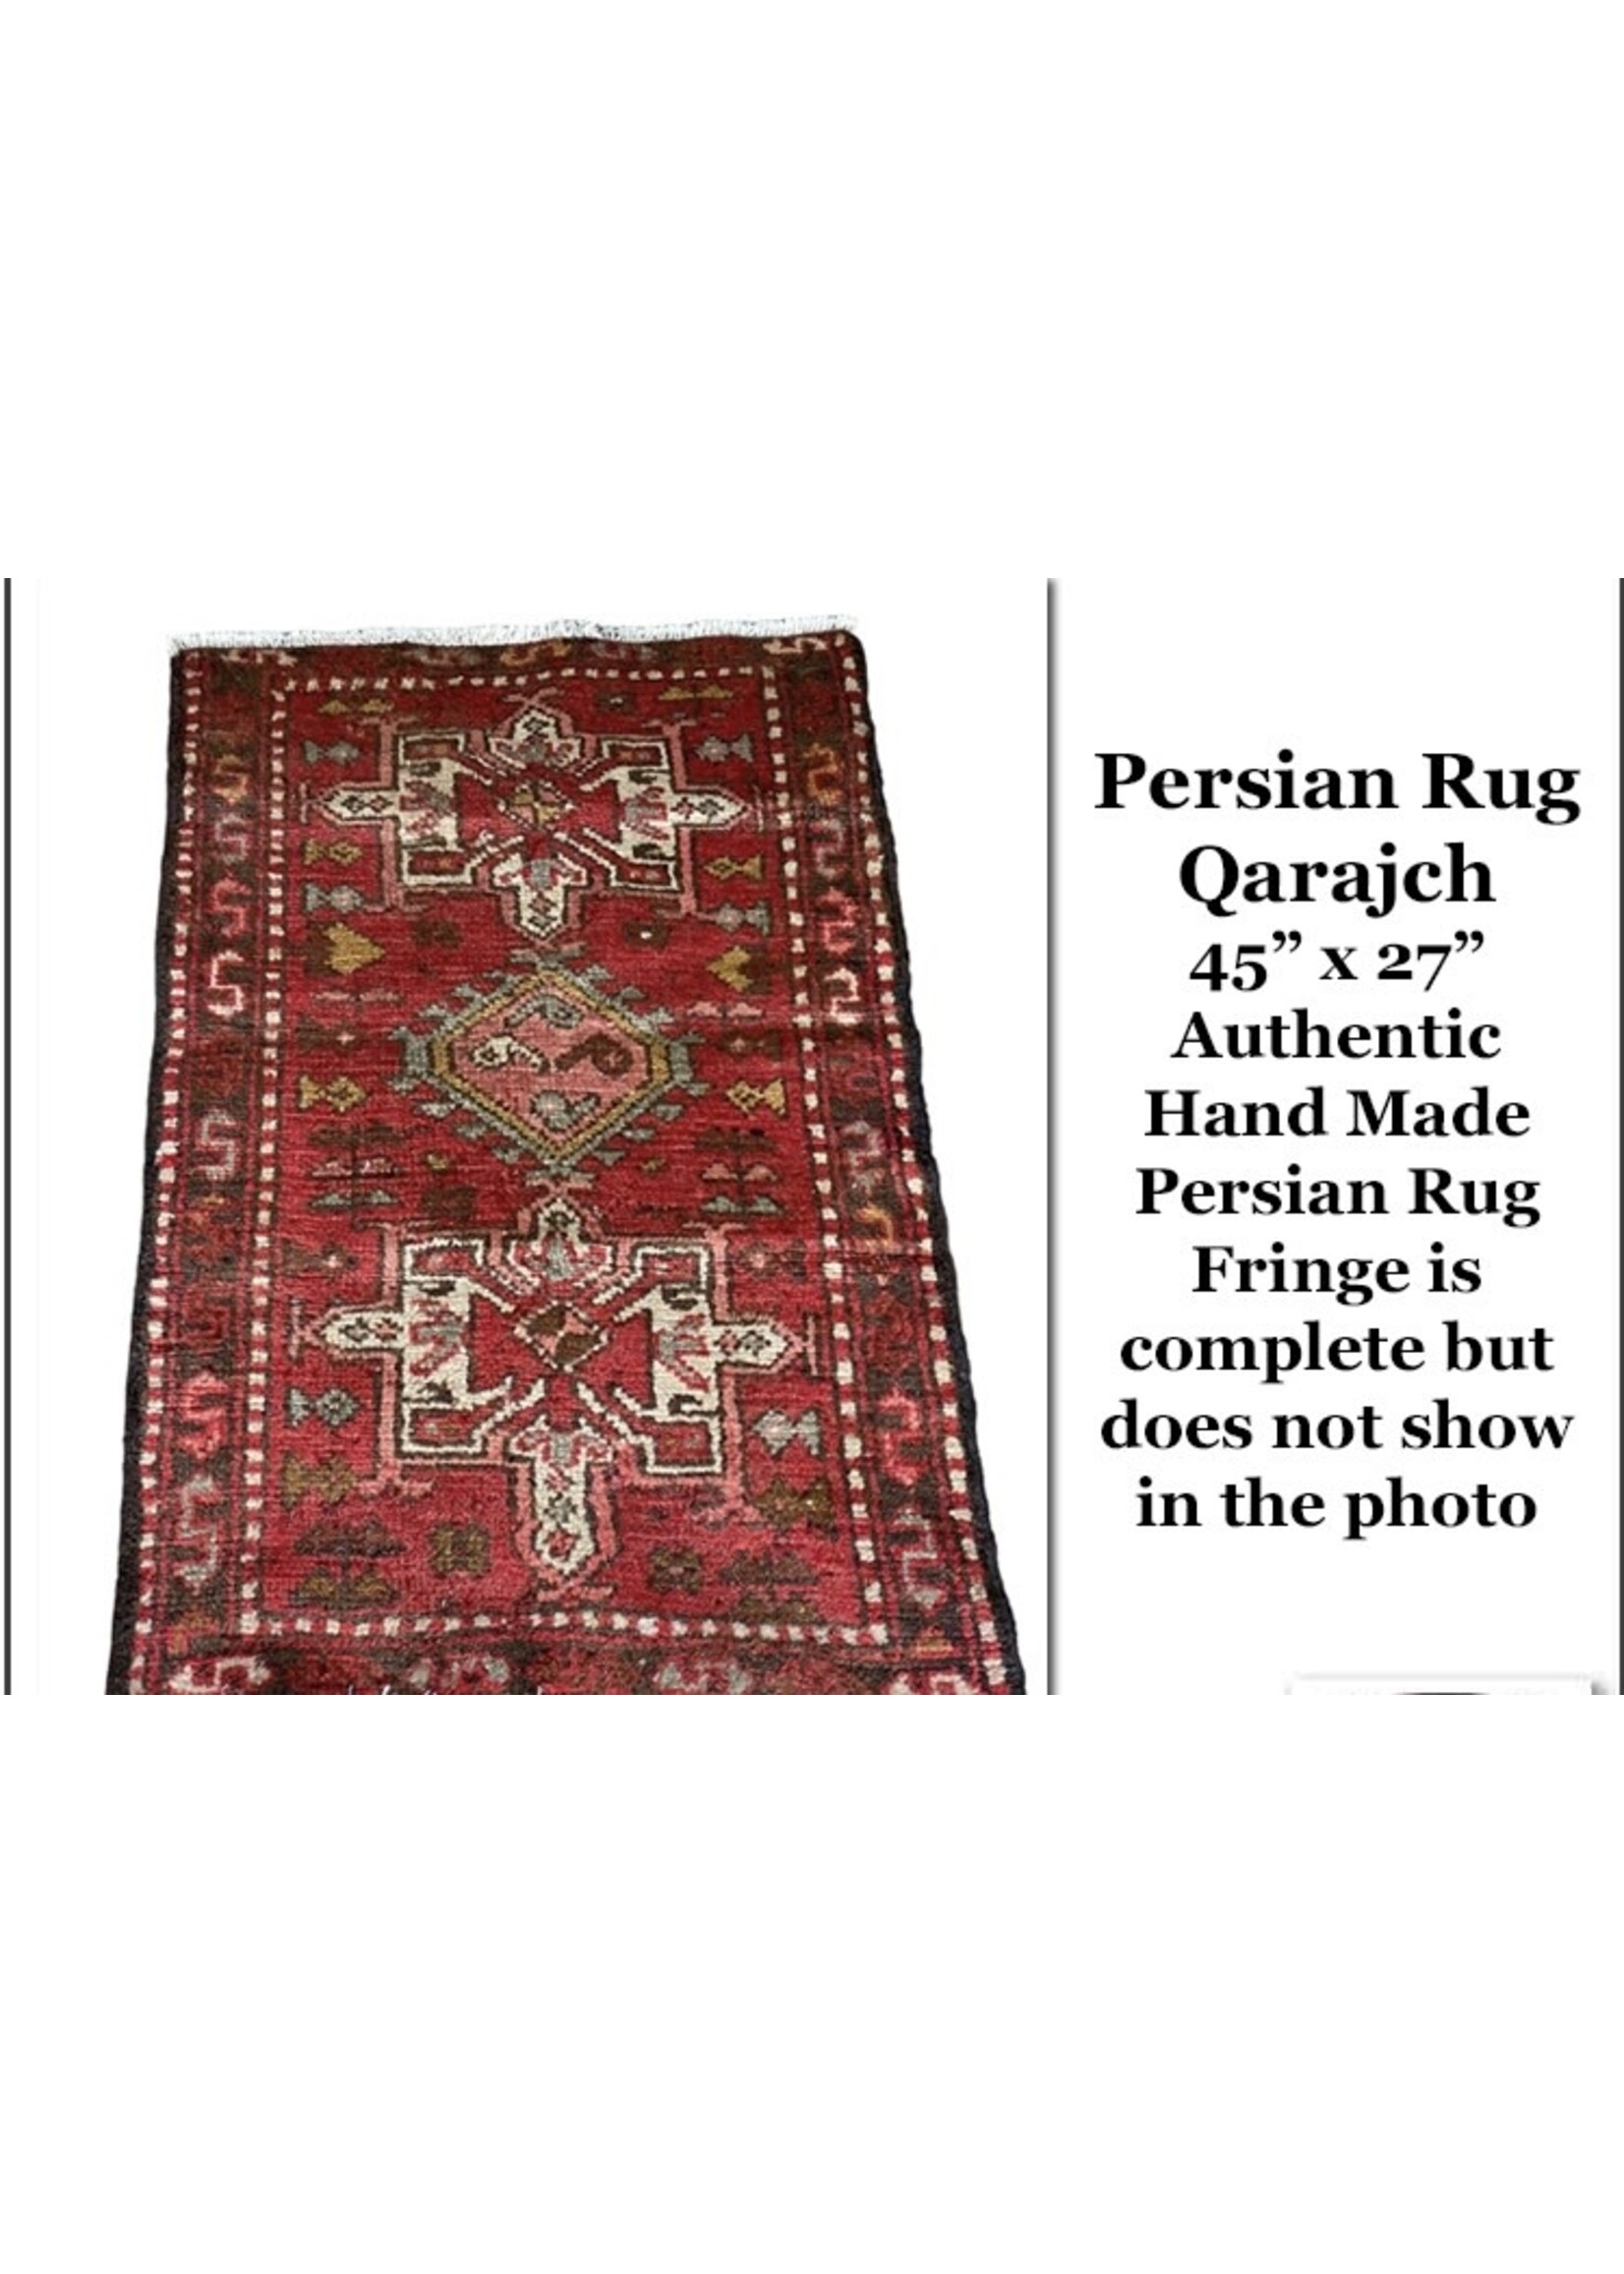 Persian Rug Qarajch 45”×27